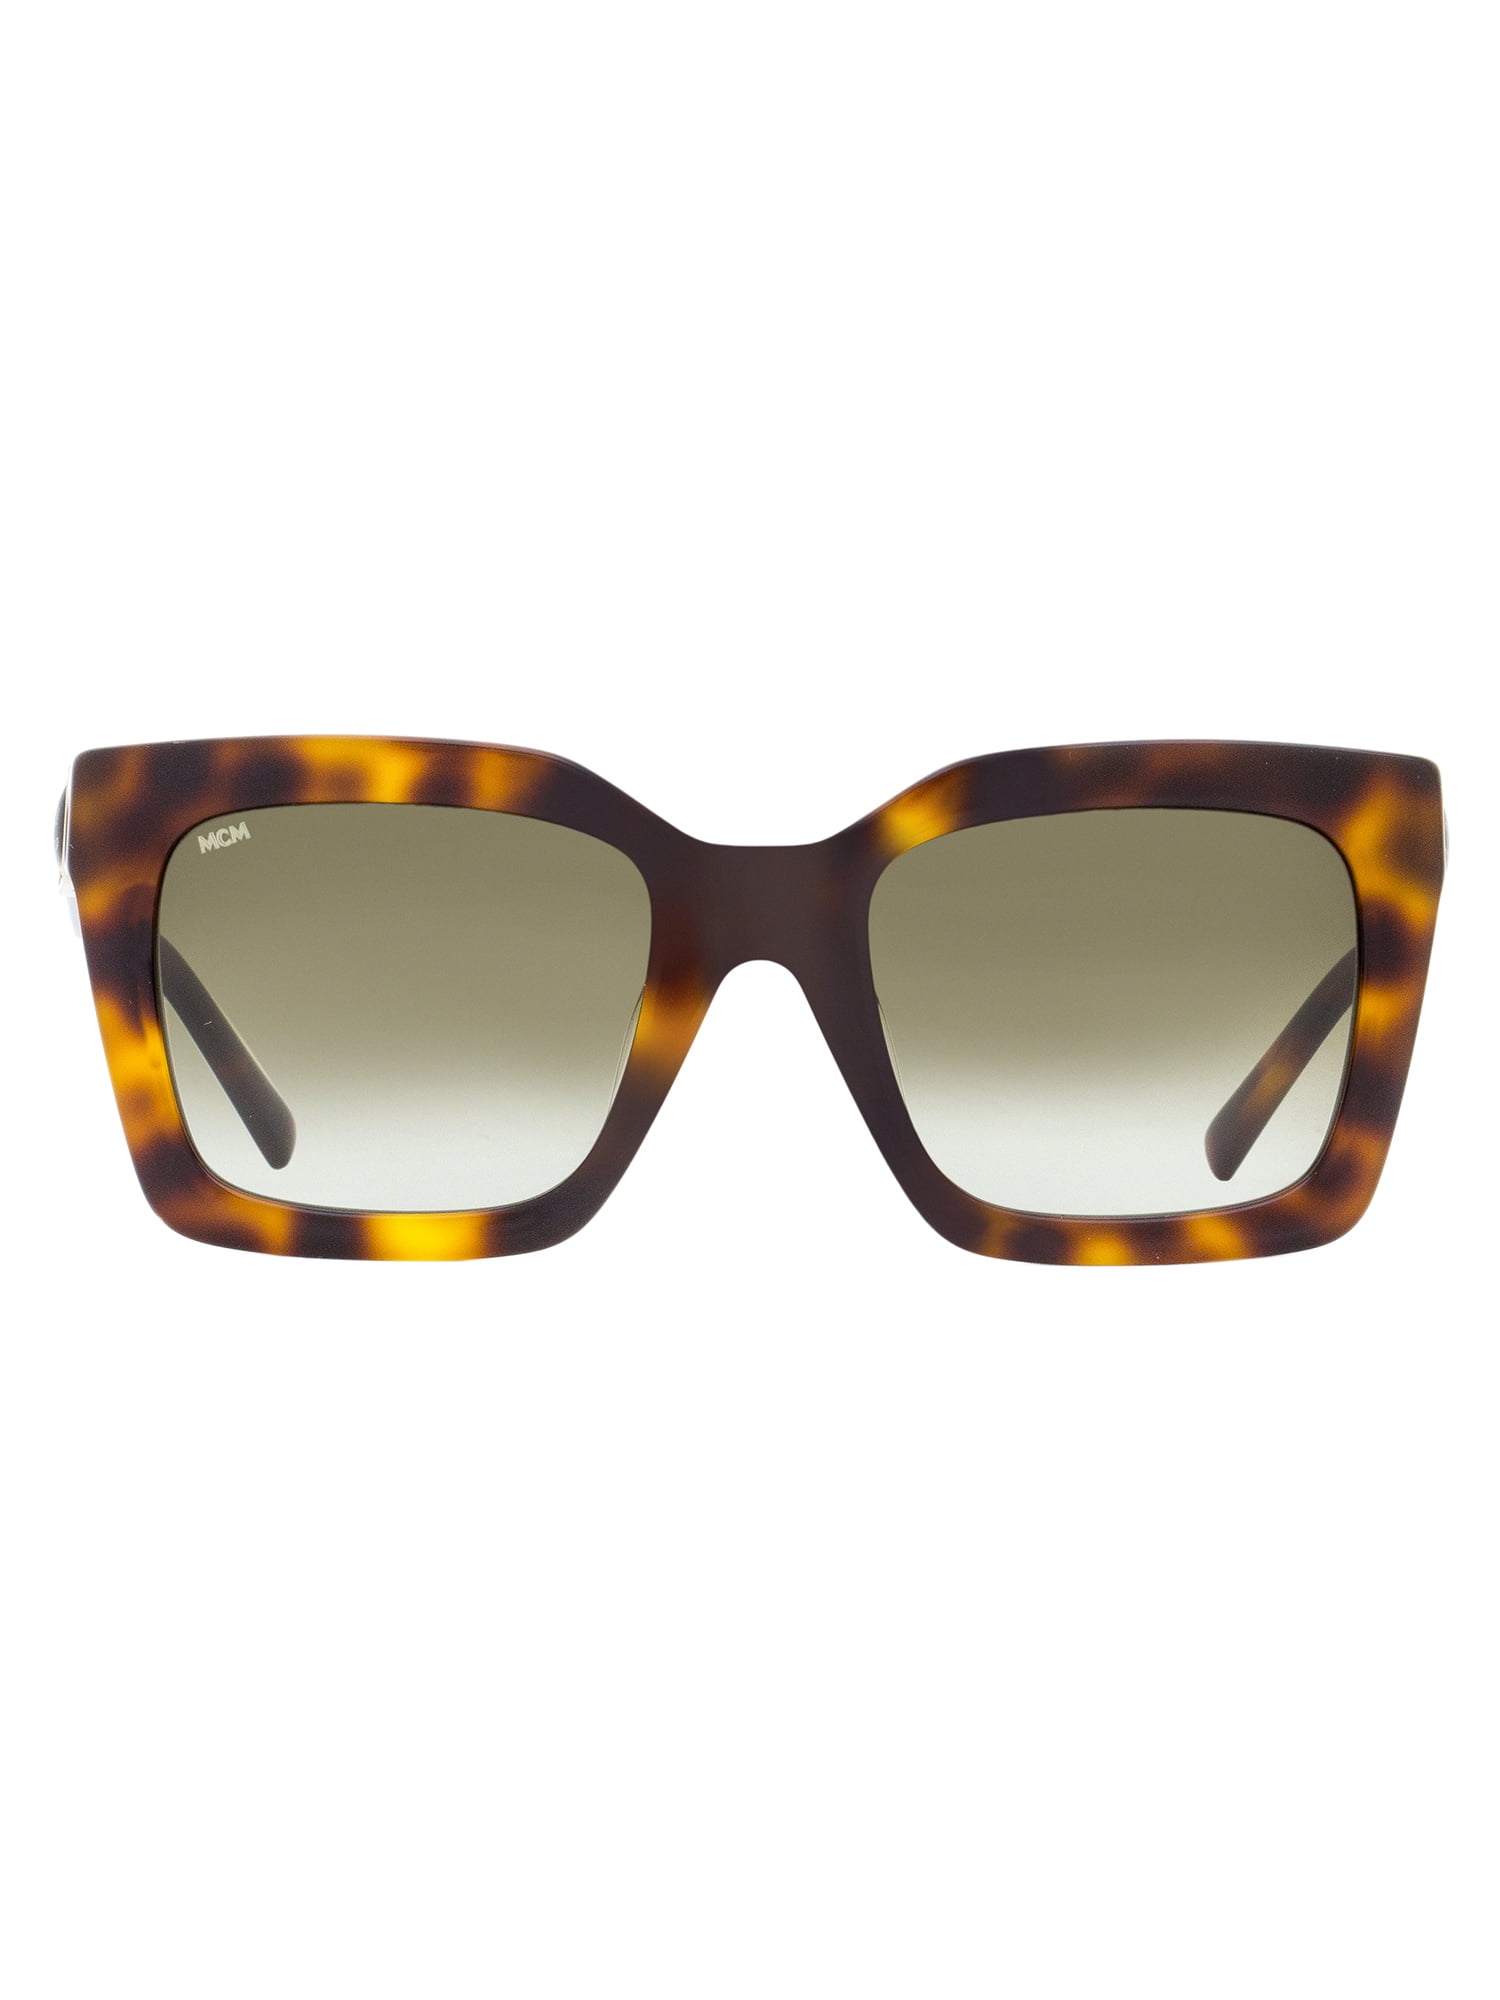 Buy MCM Brown Gradient Square Men's Sunglasses MCM727SLB 240 52 Online ...